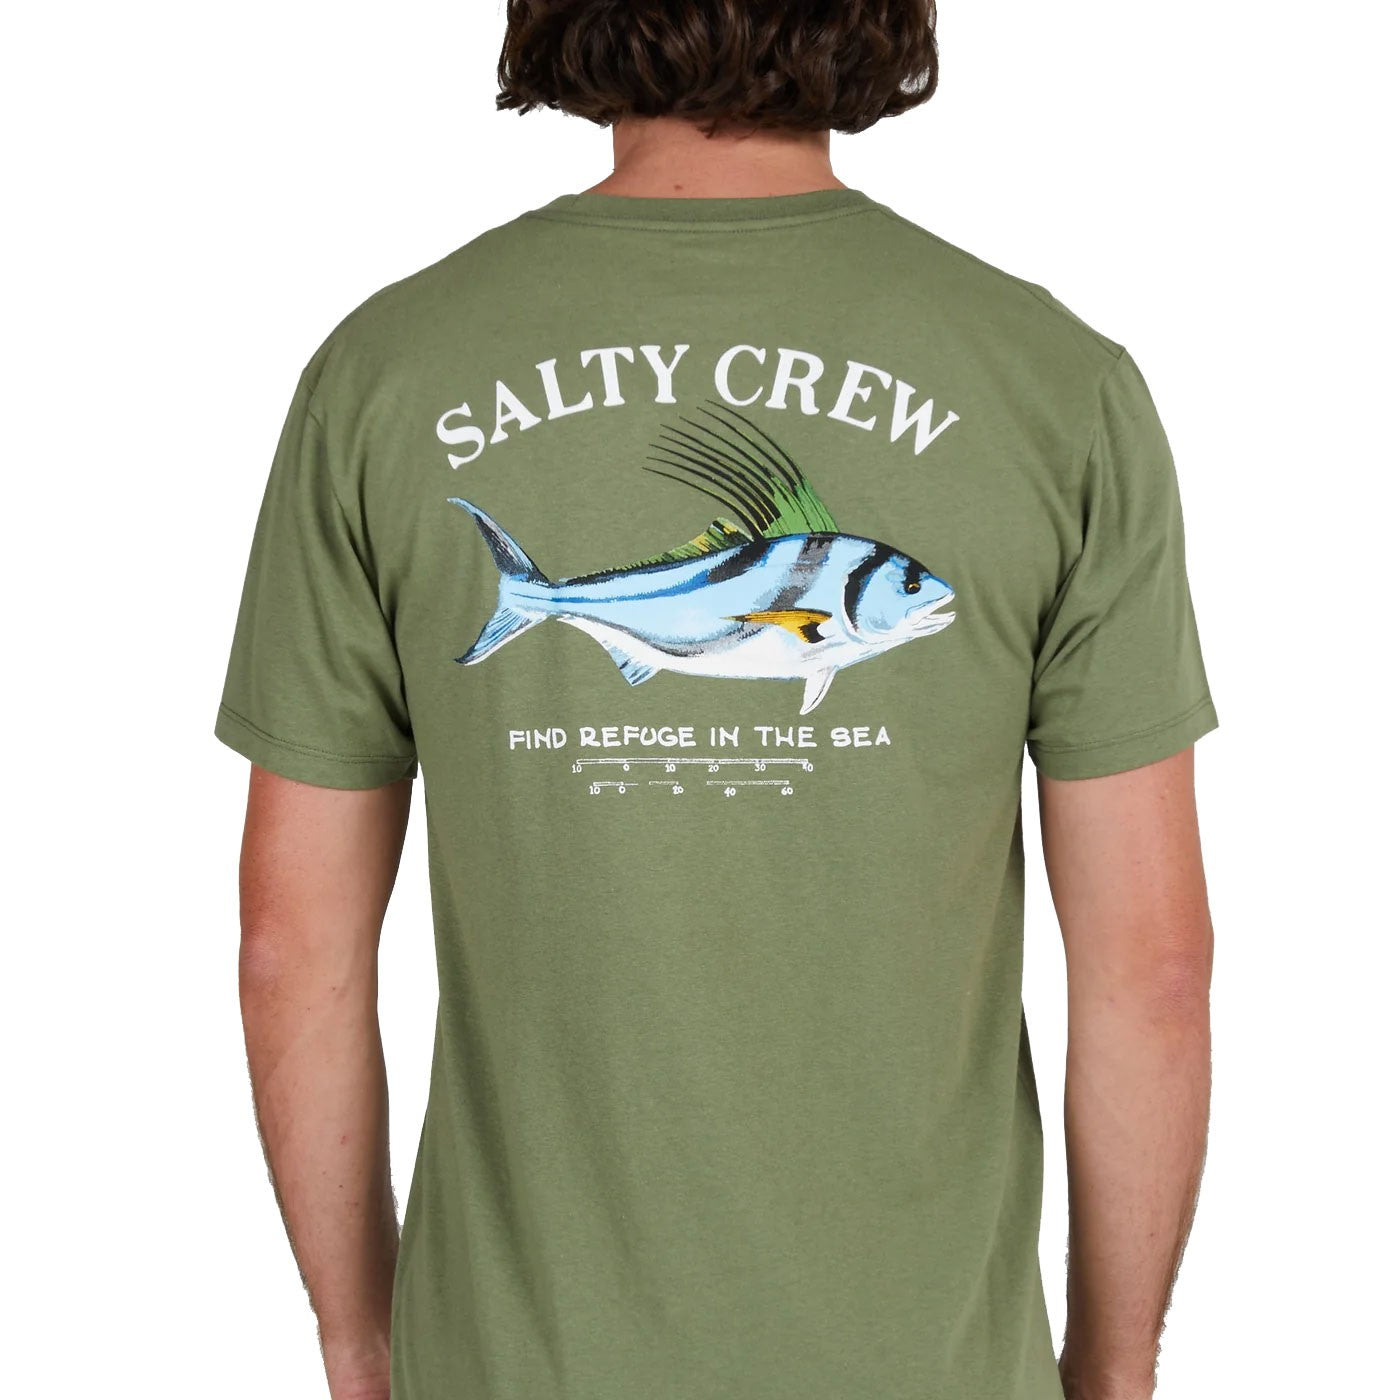 Salty Crew Rooster Premium Camiseta Hombre